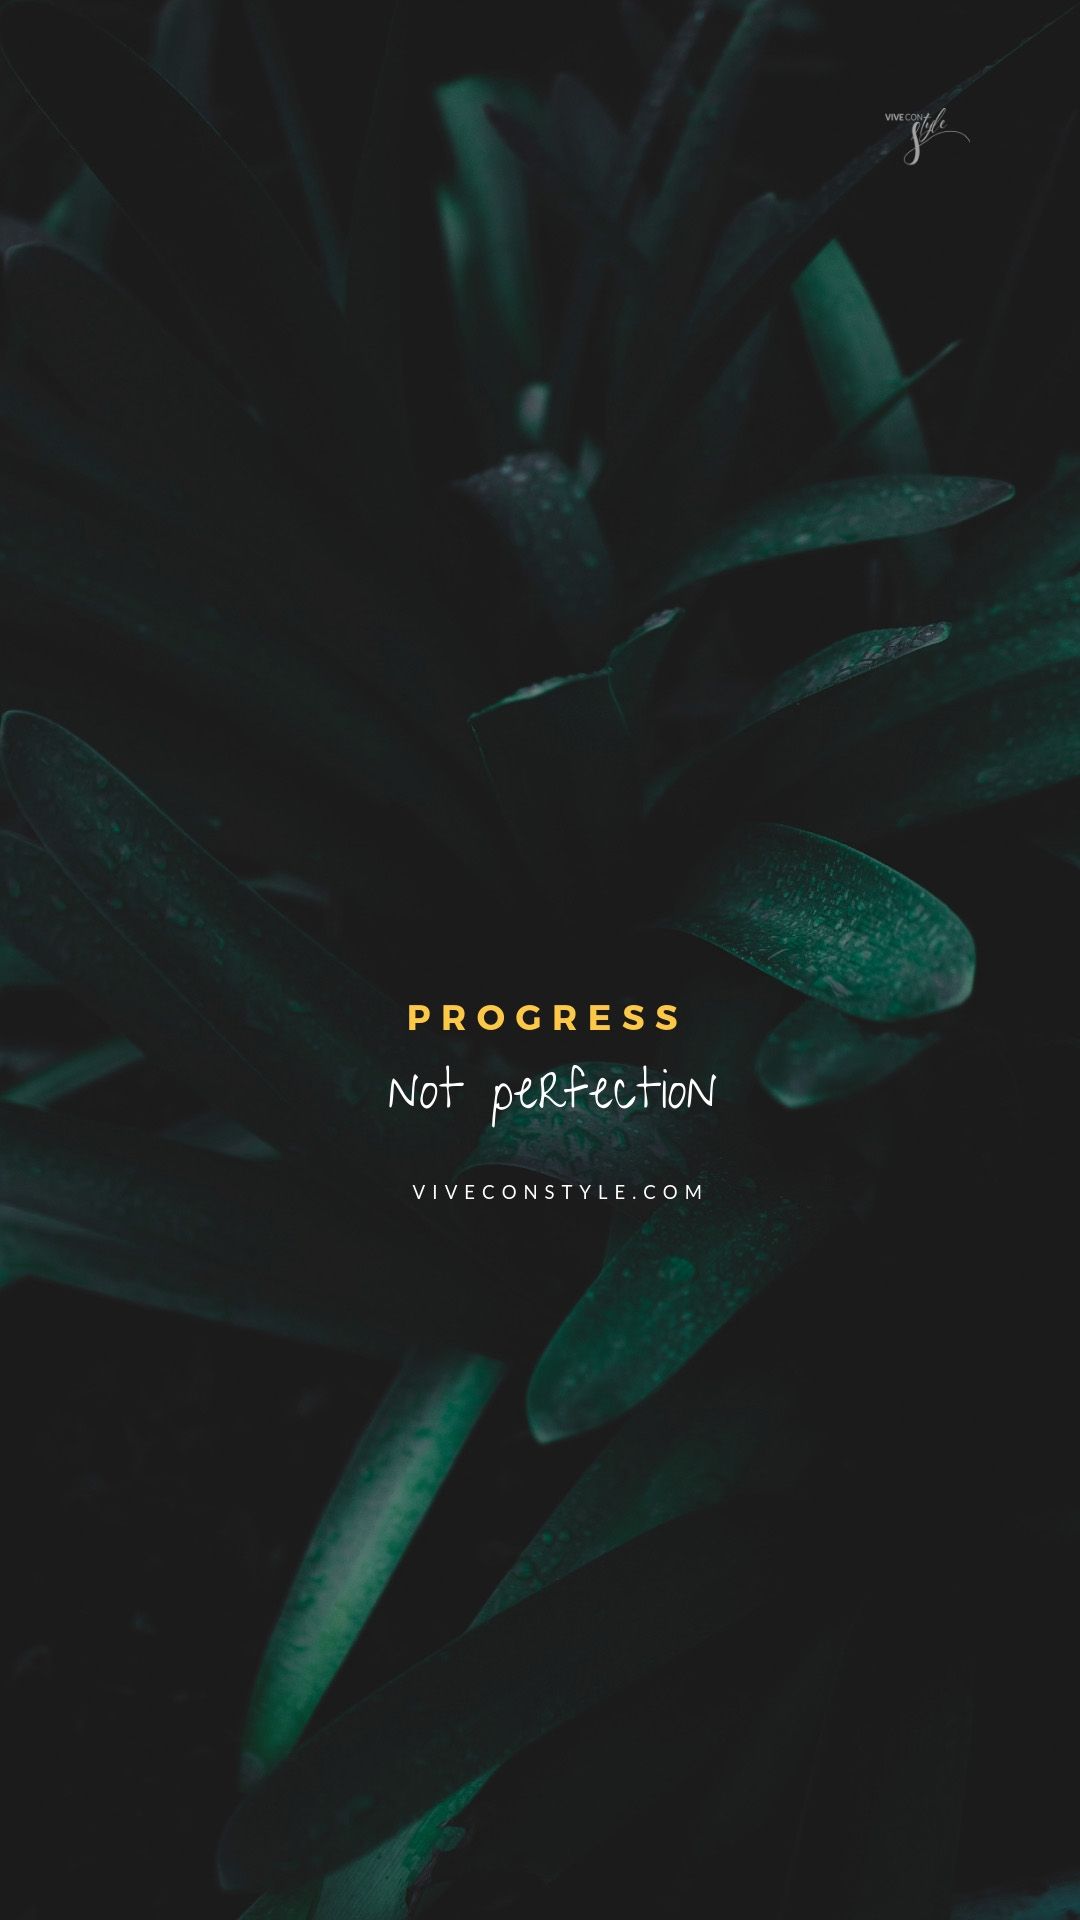 Progress not perfection. VIVE CON STYLE